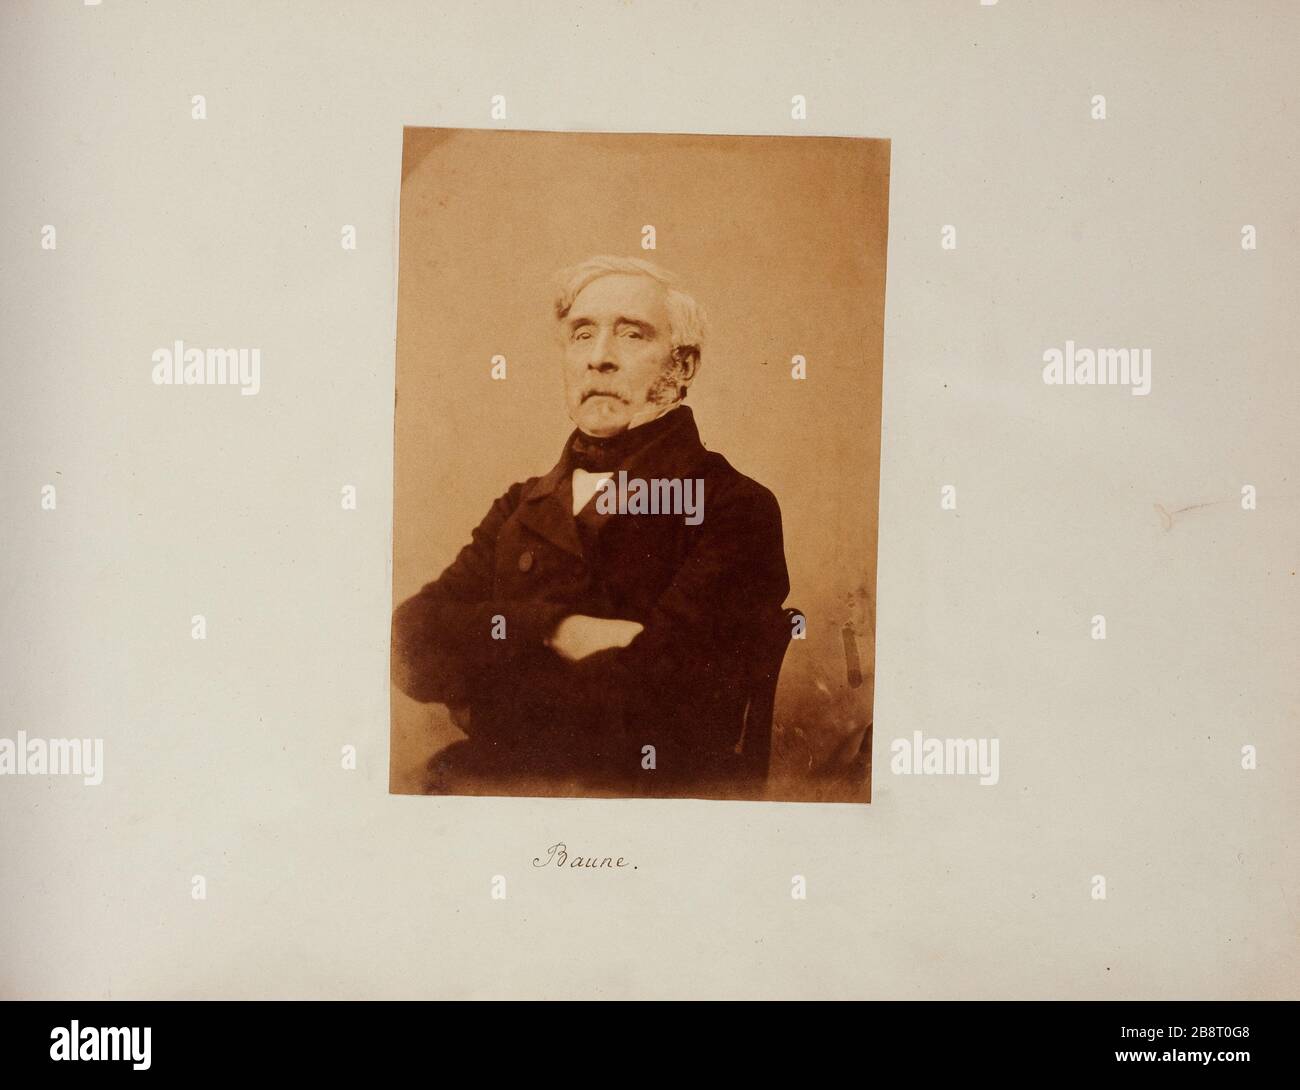 ALBUM ALLIX, 1855-1860, BAUNE 'Album Allix, 1855-1860', Baune. 1856-1858. Photographie anonyme. Paris, Maison de Victor Hugo. Stockfoto